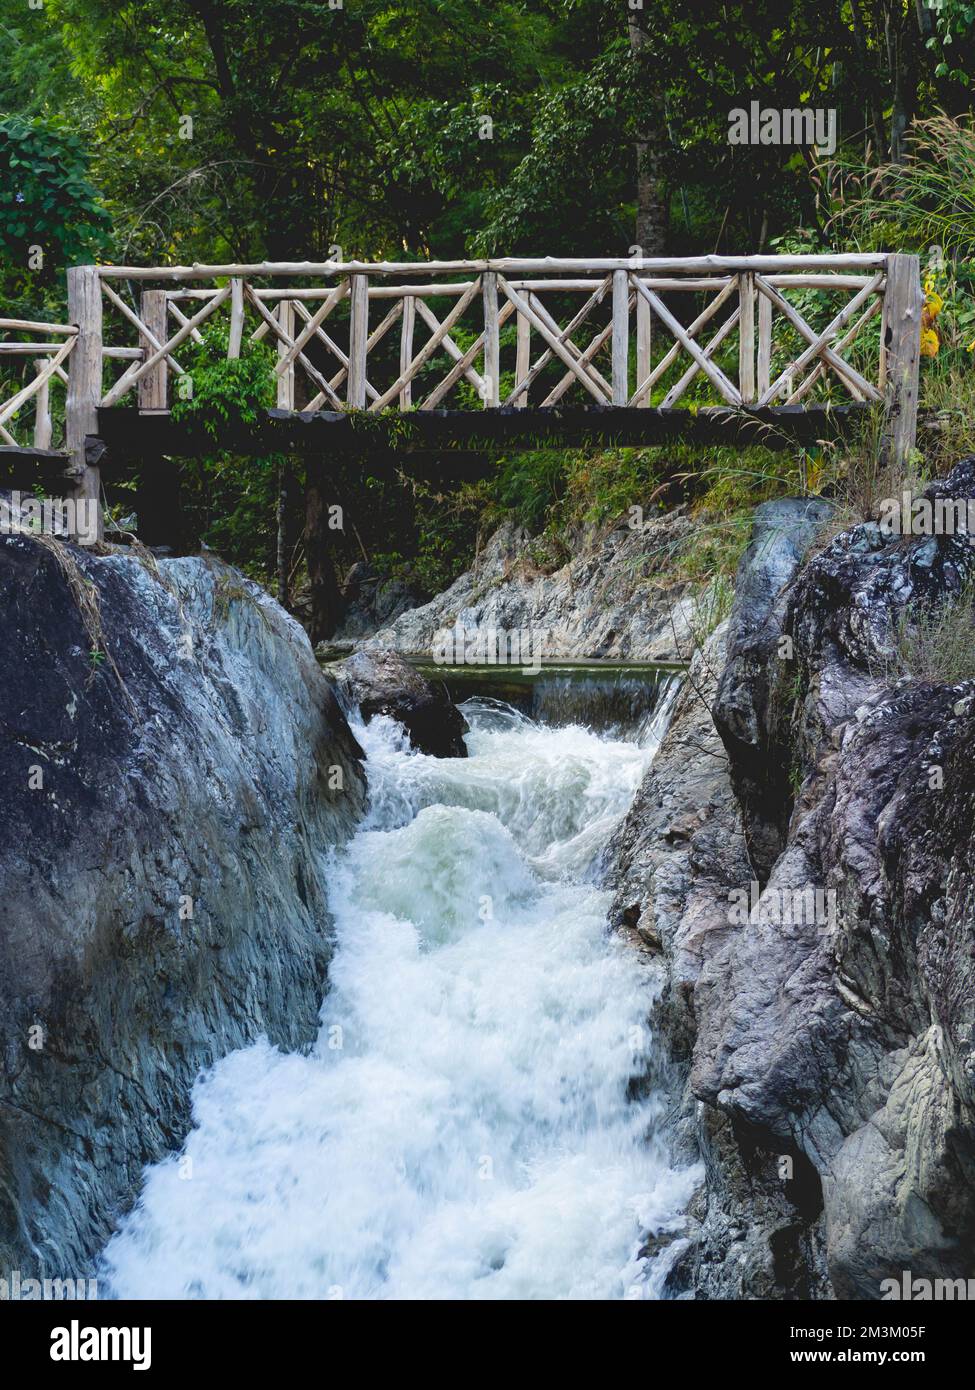 Waterfalls and bridges over water Stock Photo